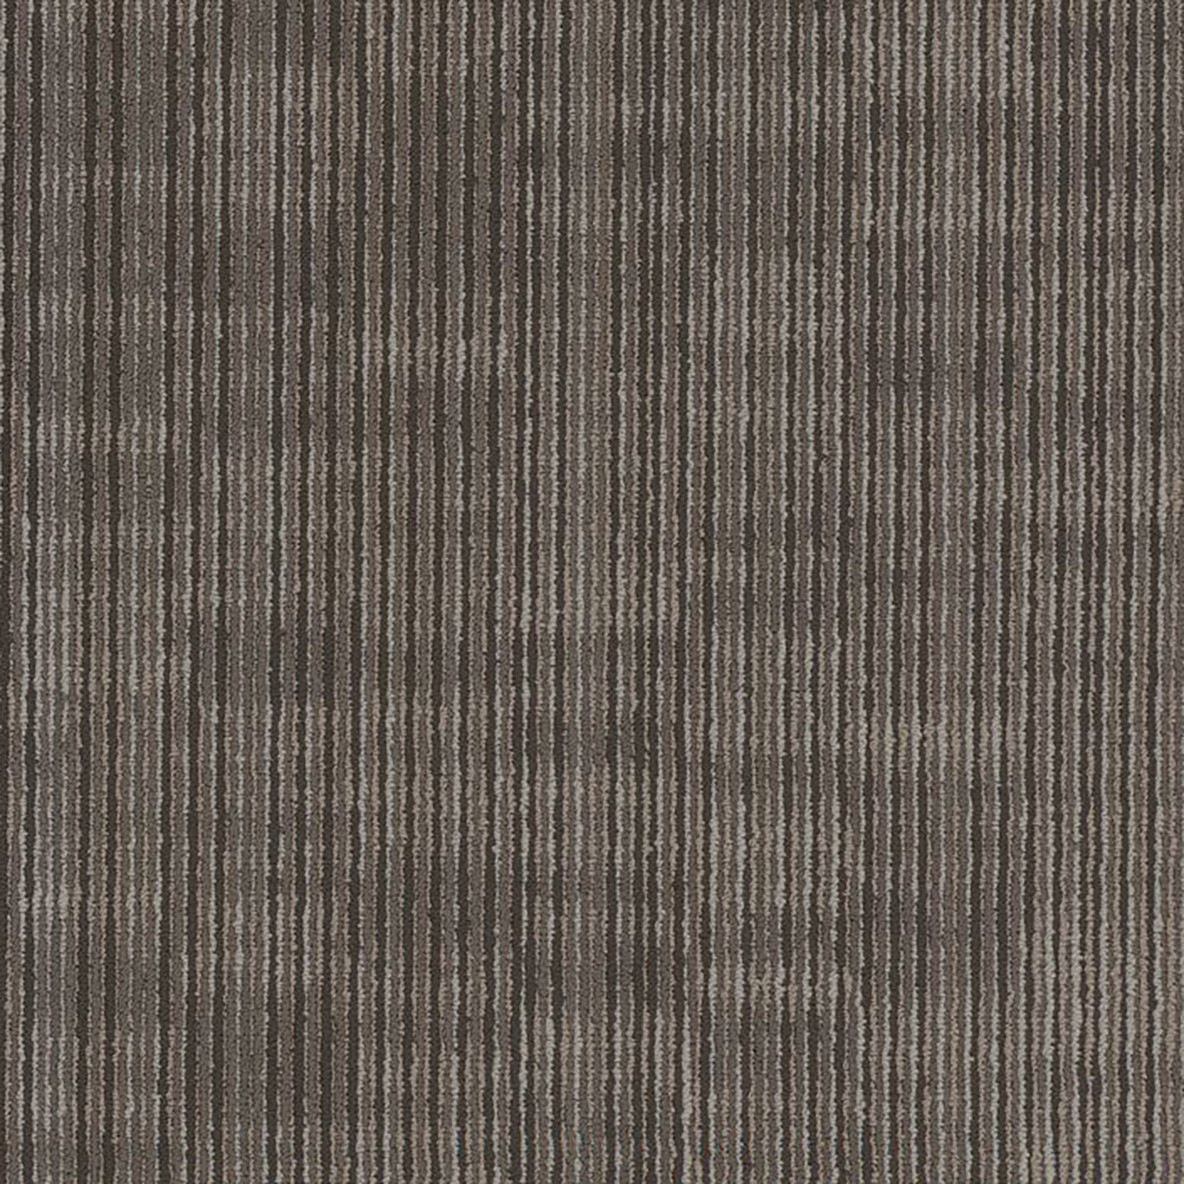 Trinity Commercial Carpet Plank .22 Inch x 1.5x3 Ft. 10 per Carton Digital color close up